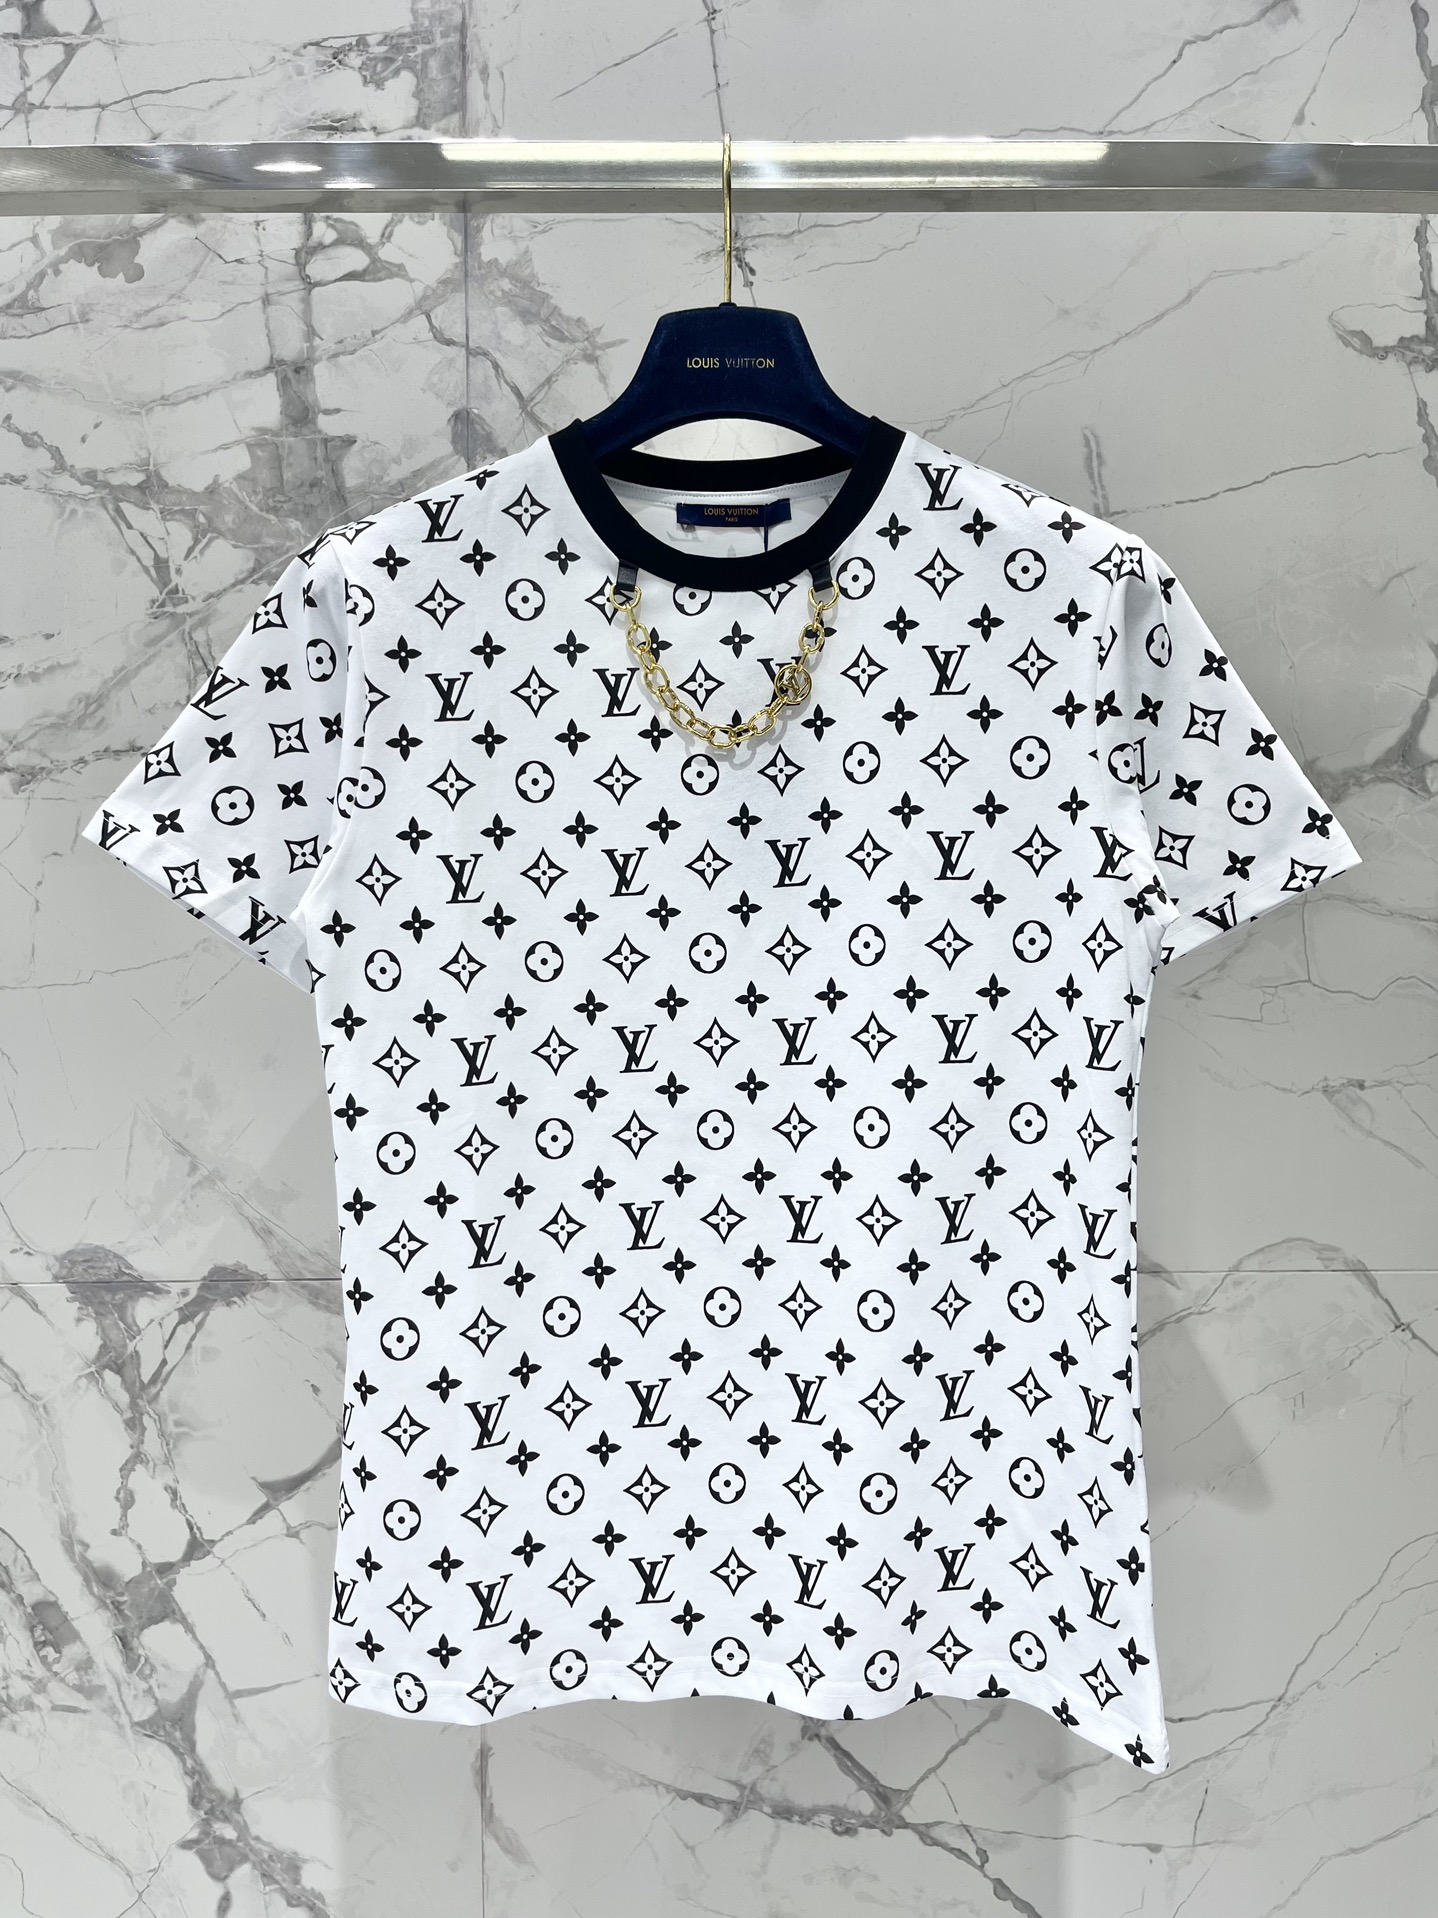 Louis Vuitton Kleding T-Shirt Afdrukken Lente/Zomercollectie Fashion Kettingen